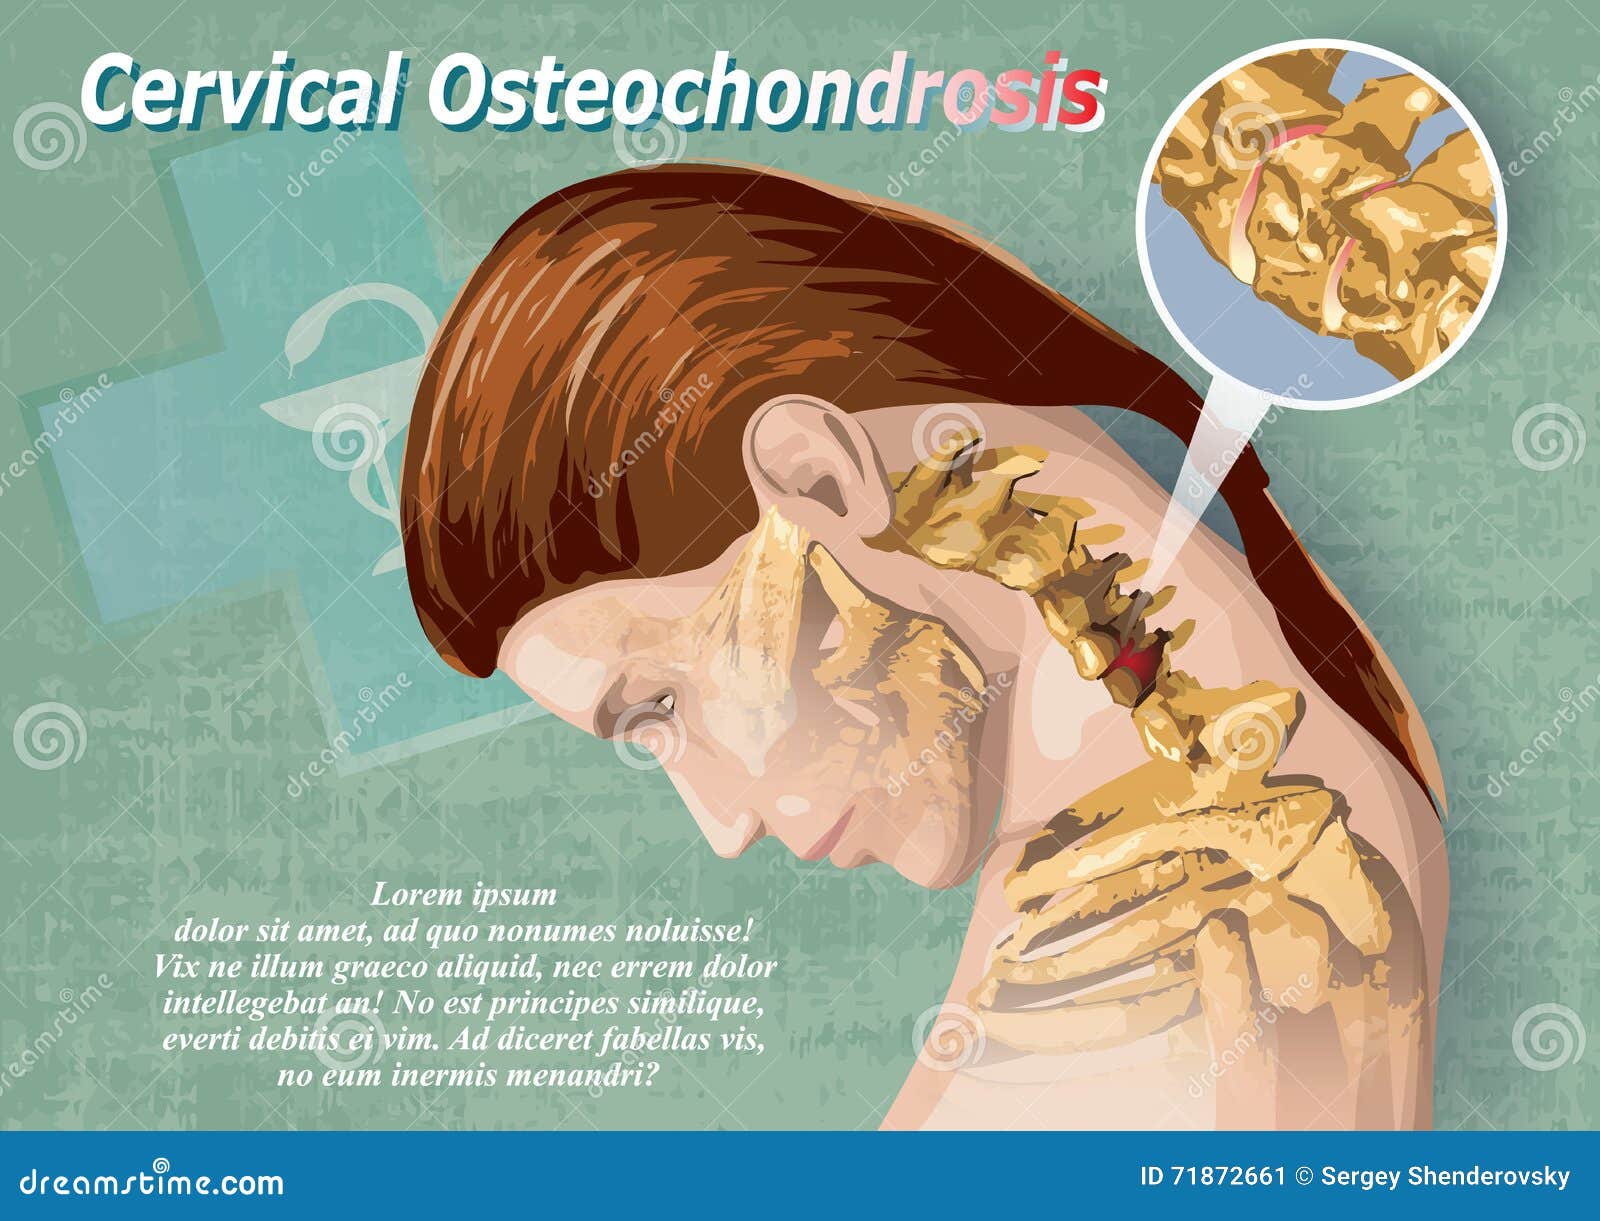 osteochondrosis neck